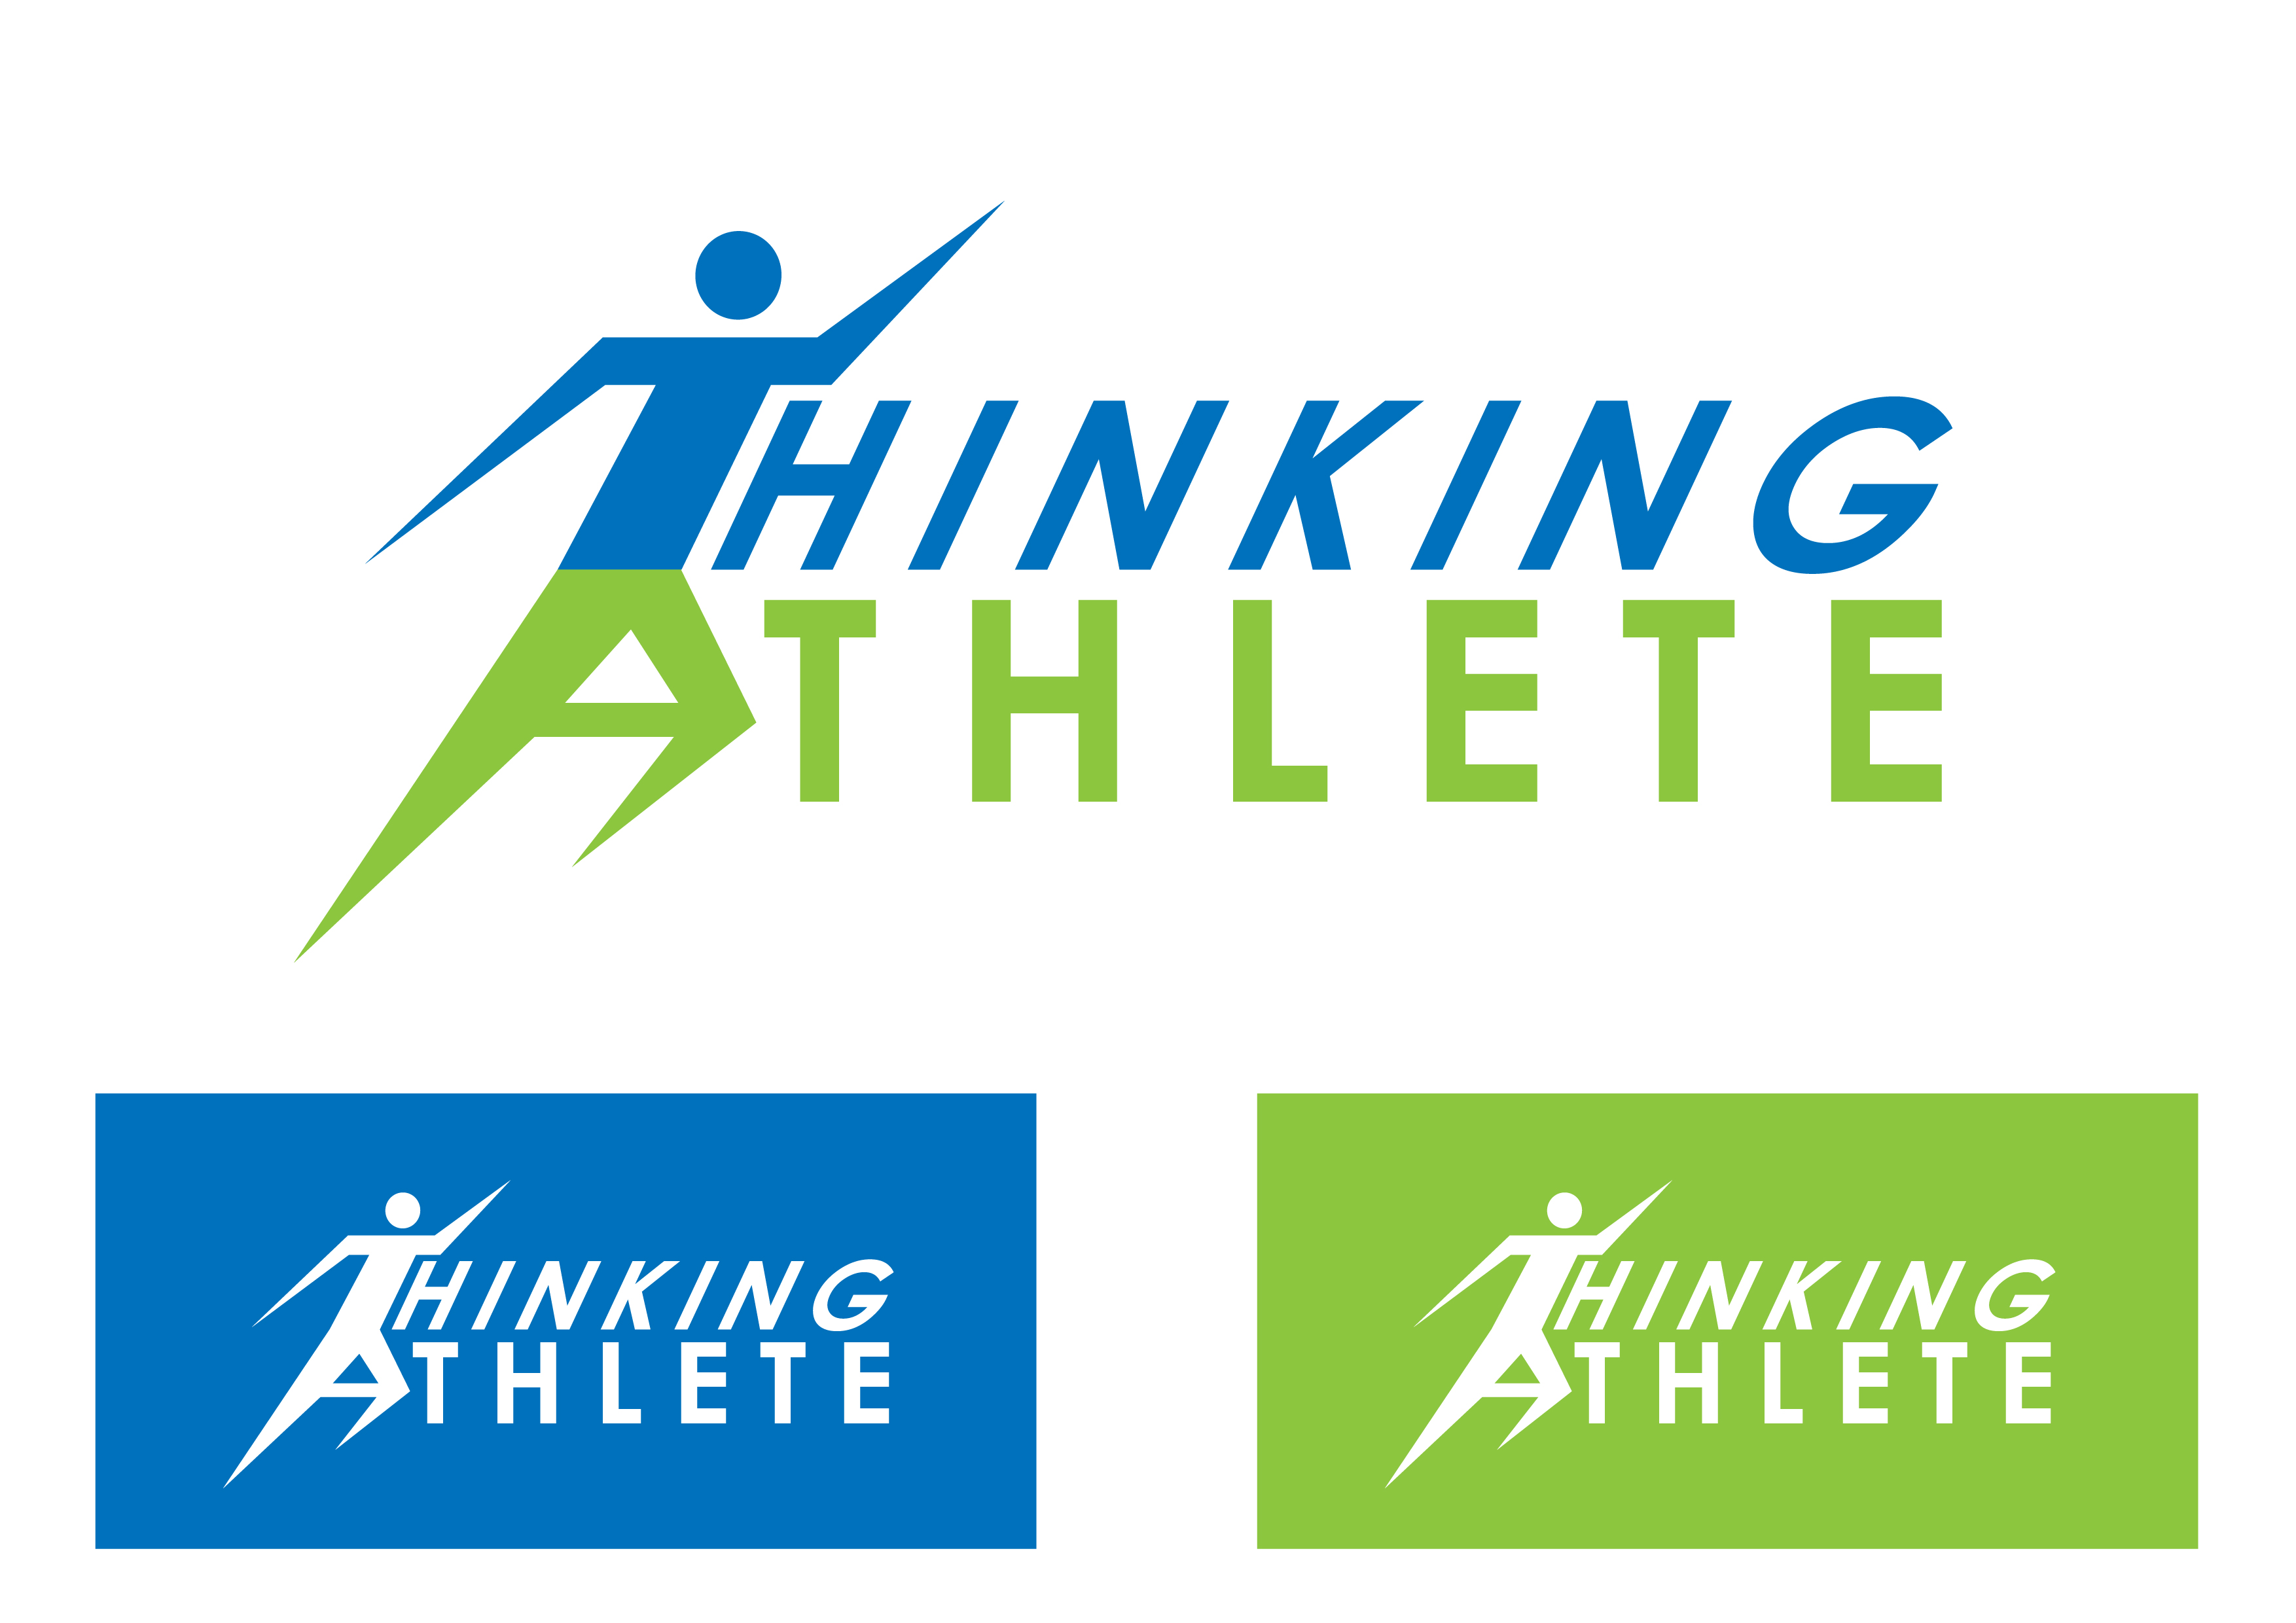 Athletic Company Logo - Logo Design Contests » Thinking Athlete Logo Design » Design No. 29 ...